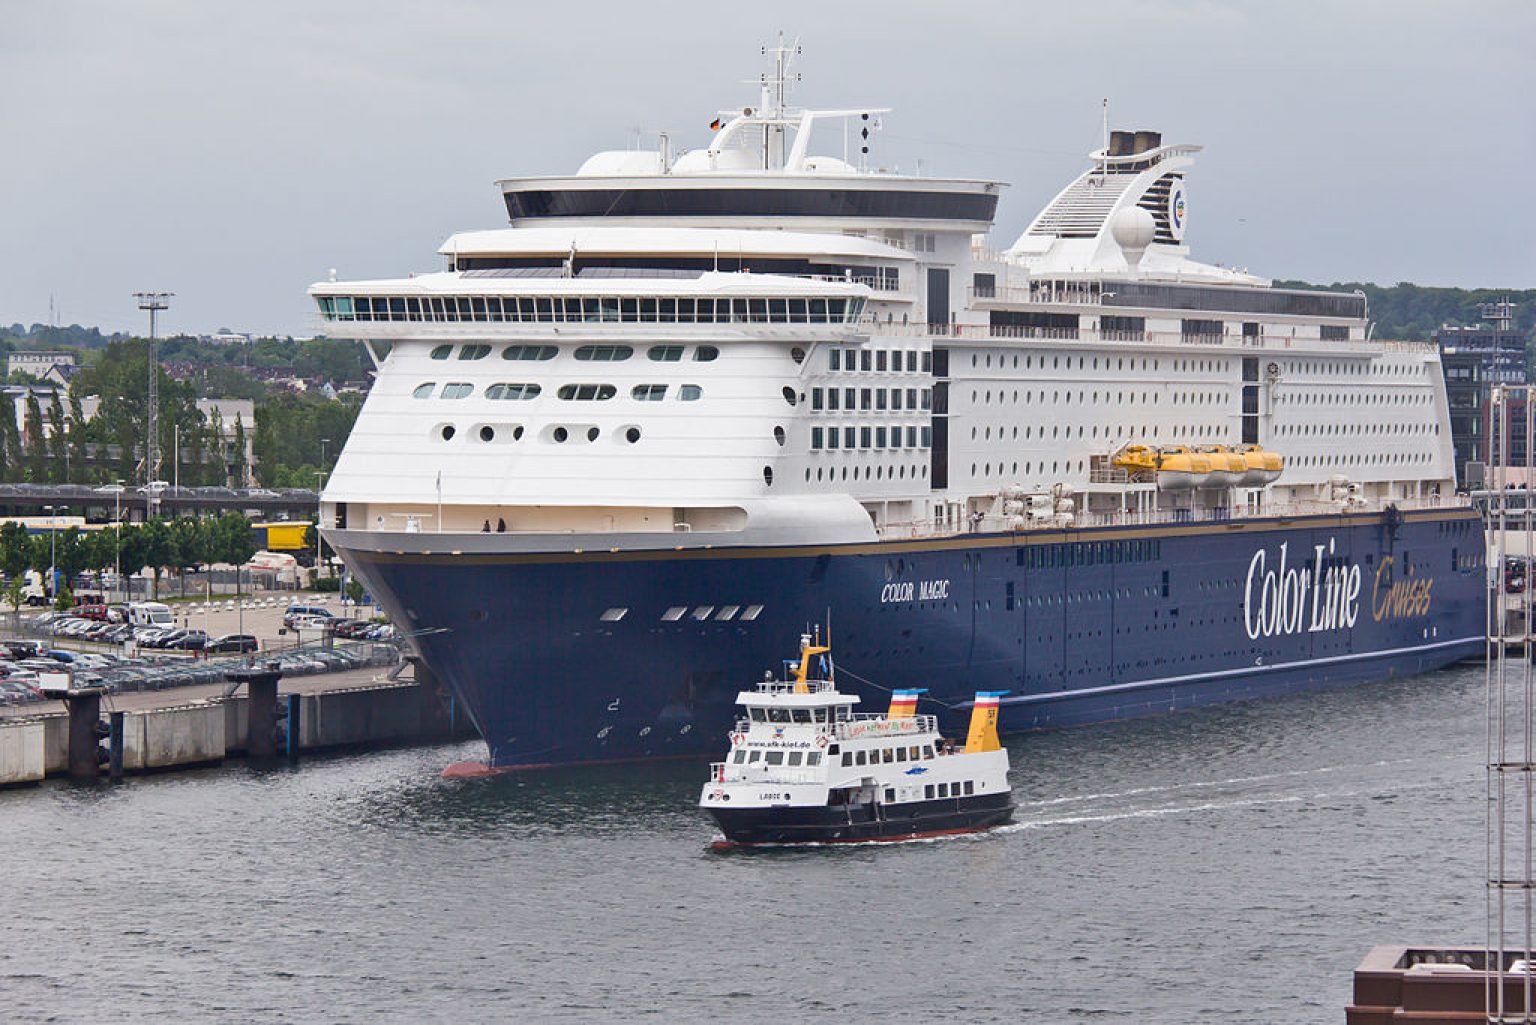 kiel oslo cruise ship